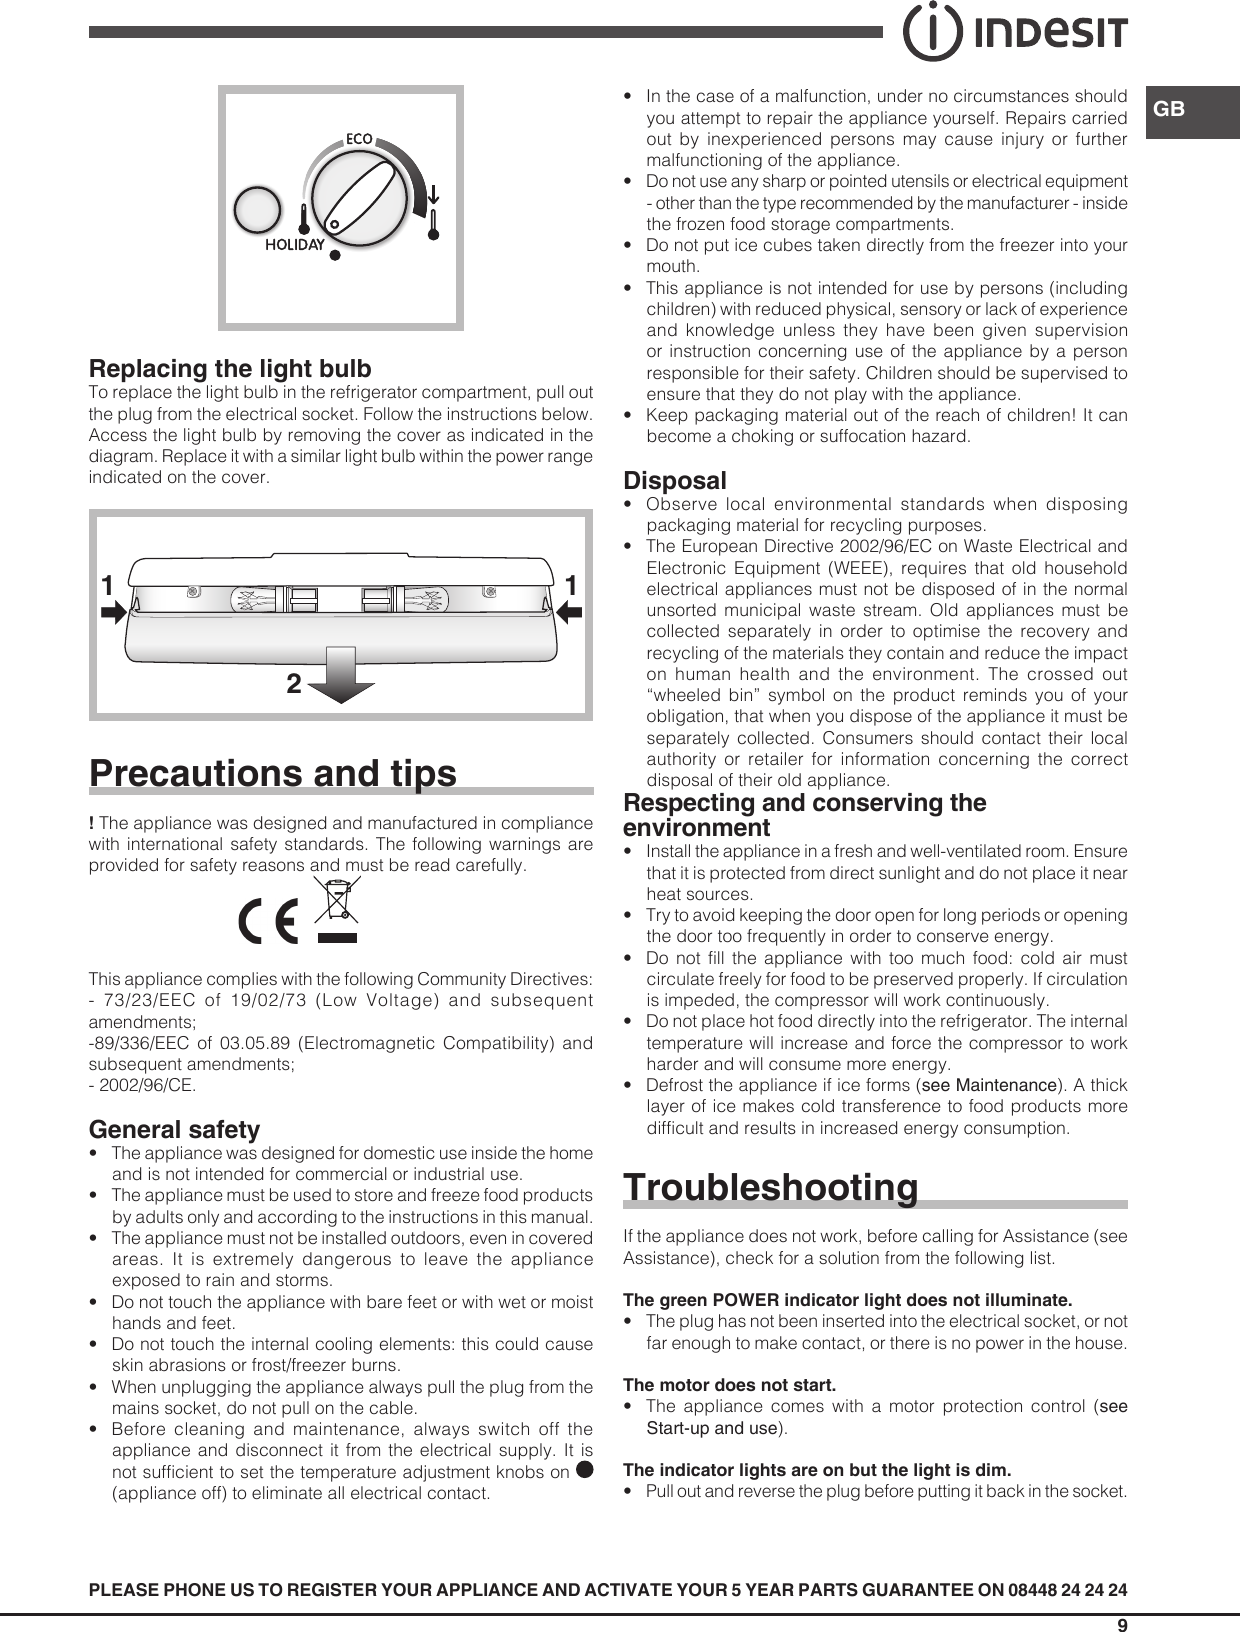 Page 9 of 12 - Indesit Indesit-Dbiaa344F-Uk-Operating-Instructions-  Indesit-dbiaa344f-uk-operating-instructions